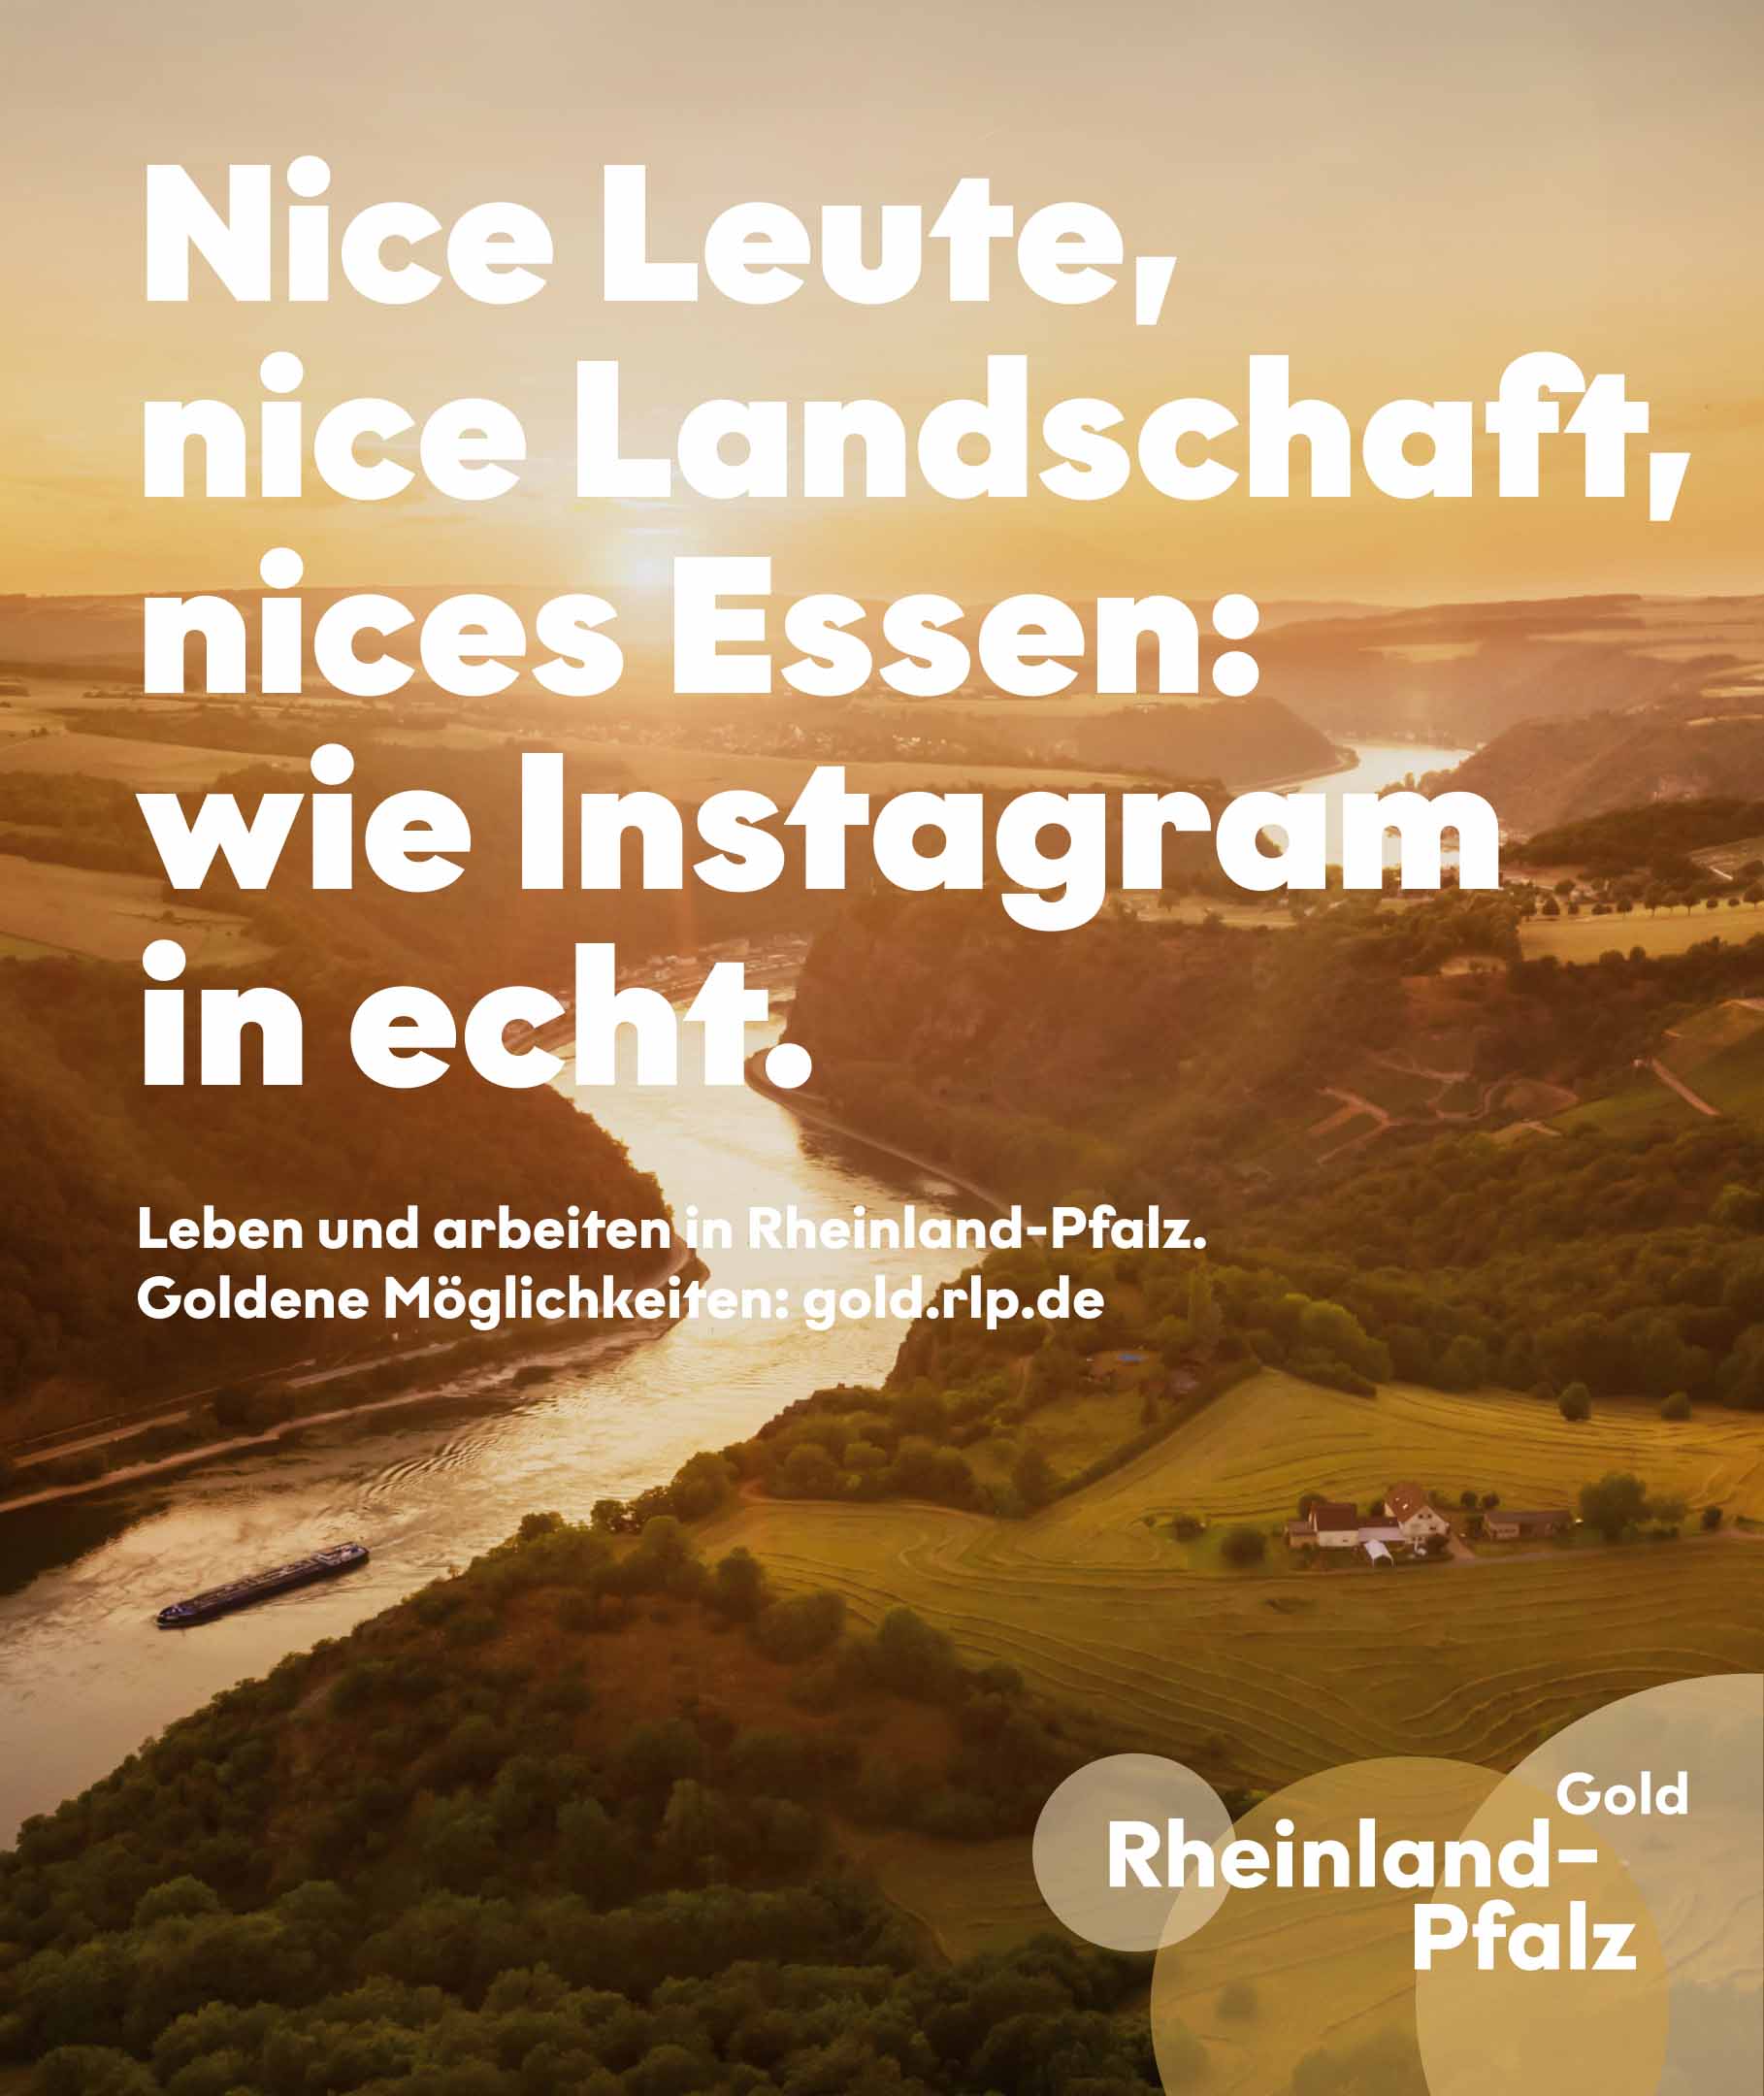 Campaign visual: Nice Leute, nice Landschaft, nices Essen: wie Instagram in echt.